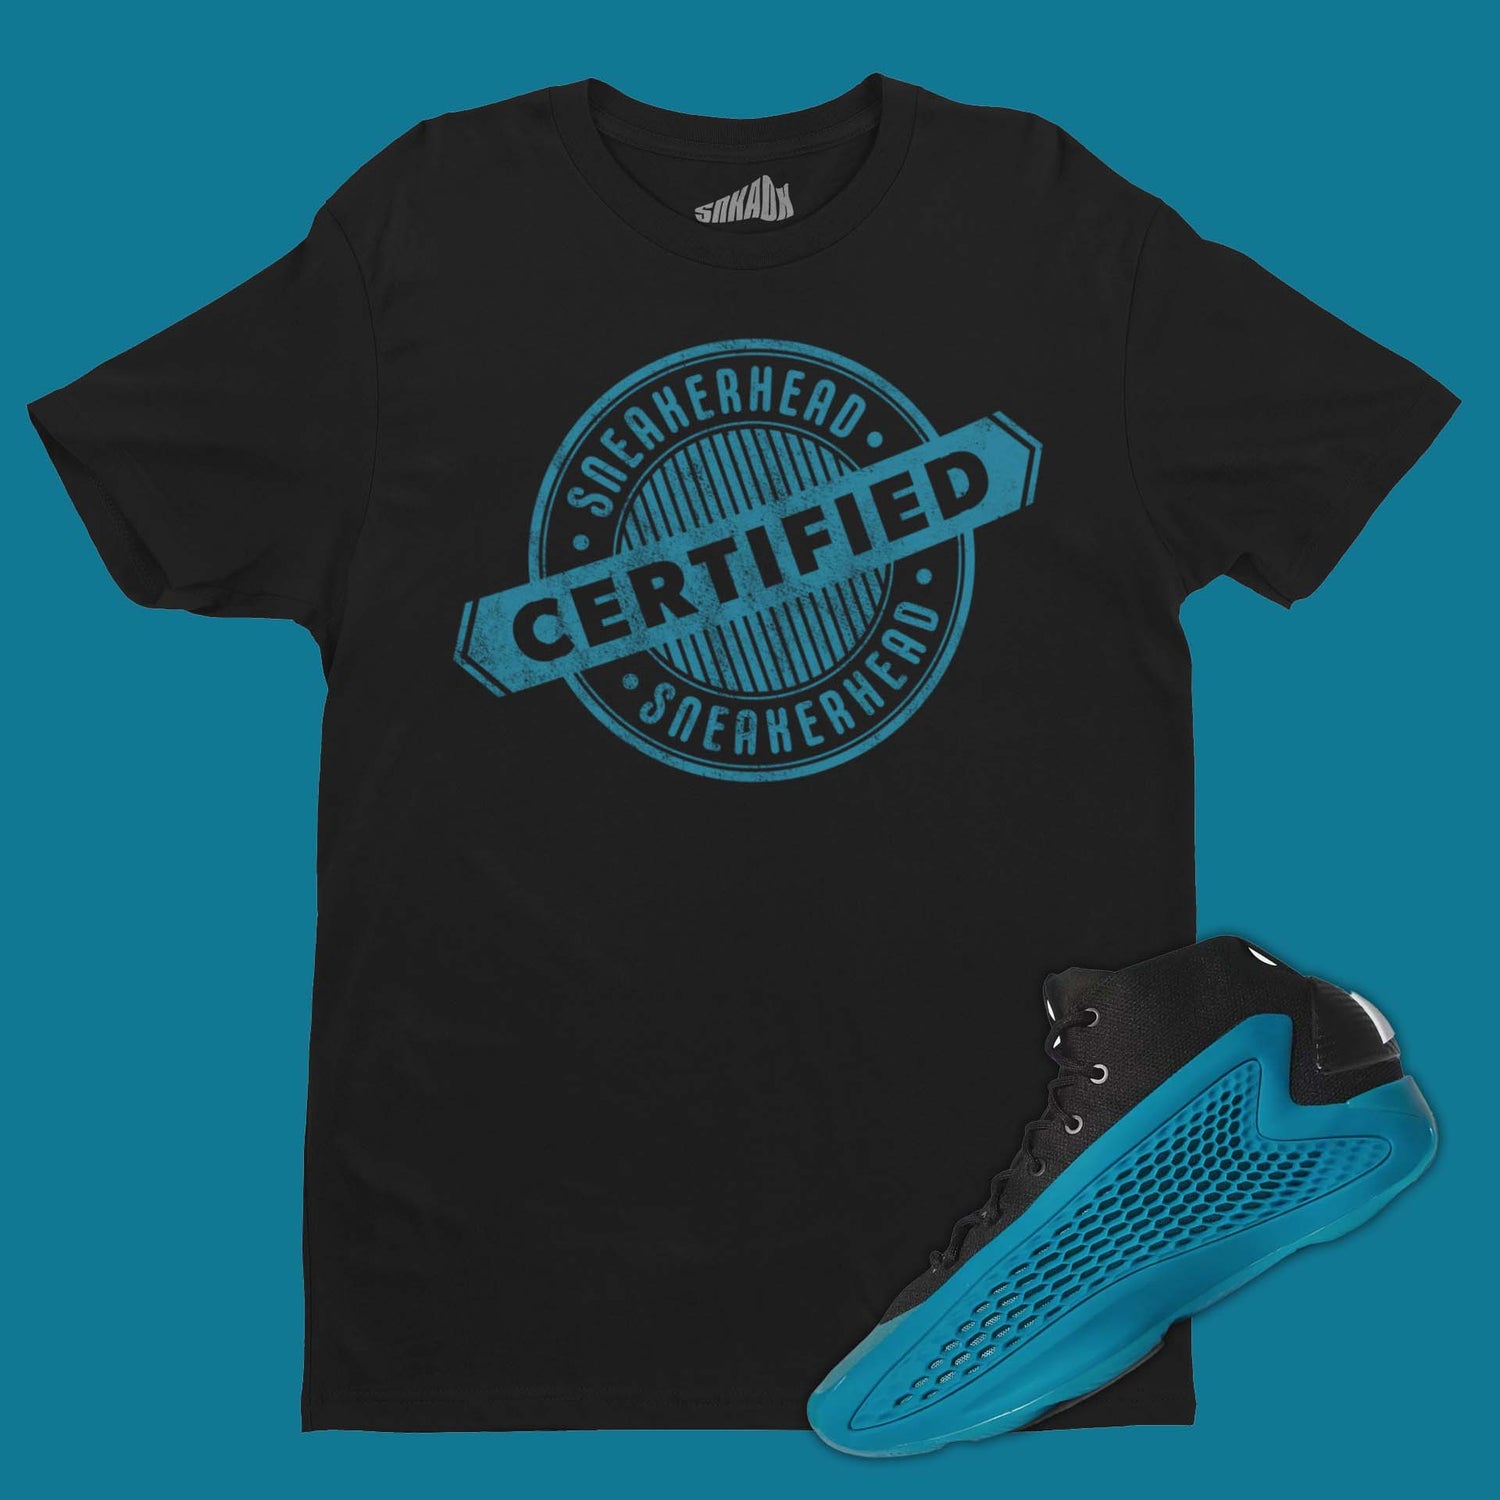 Certified Sneakerheads T-Shirt Matching AE1 Timberwolves